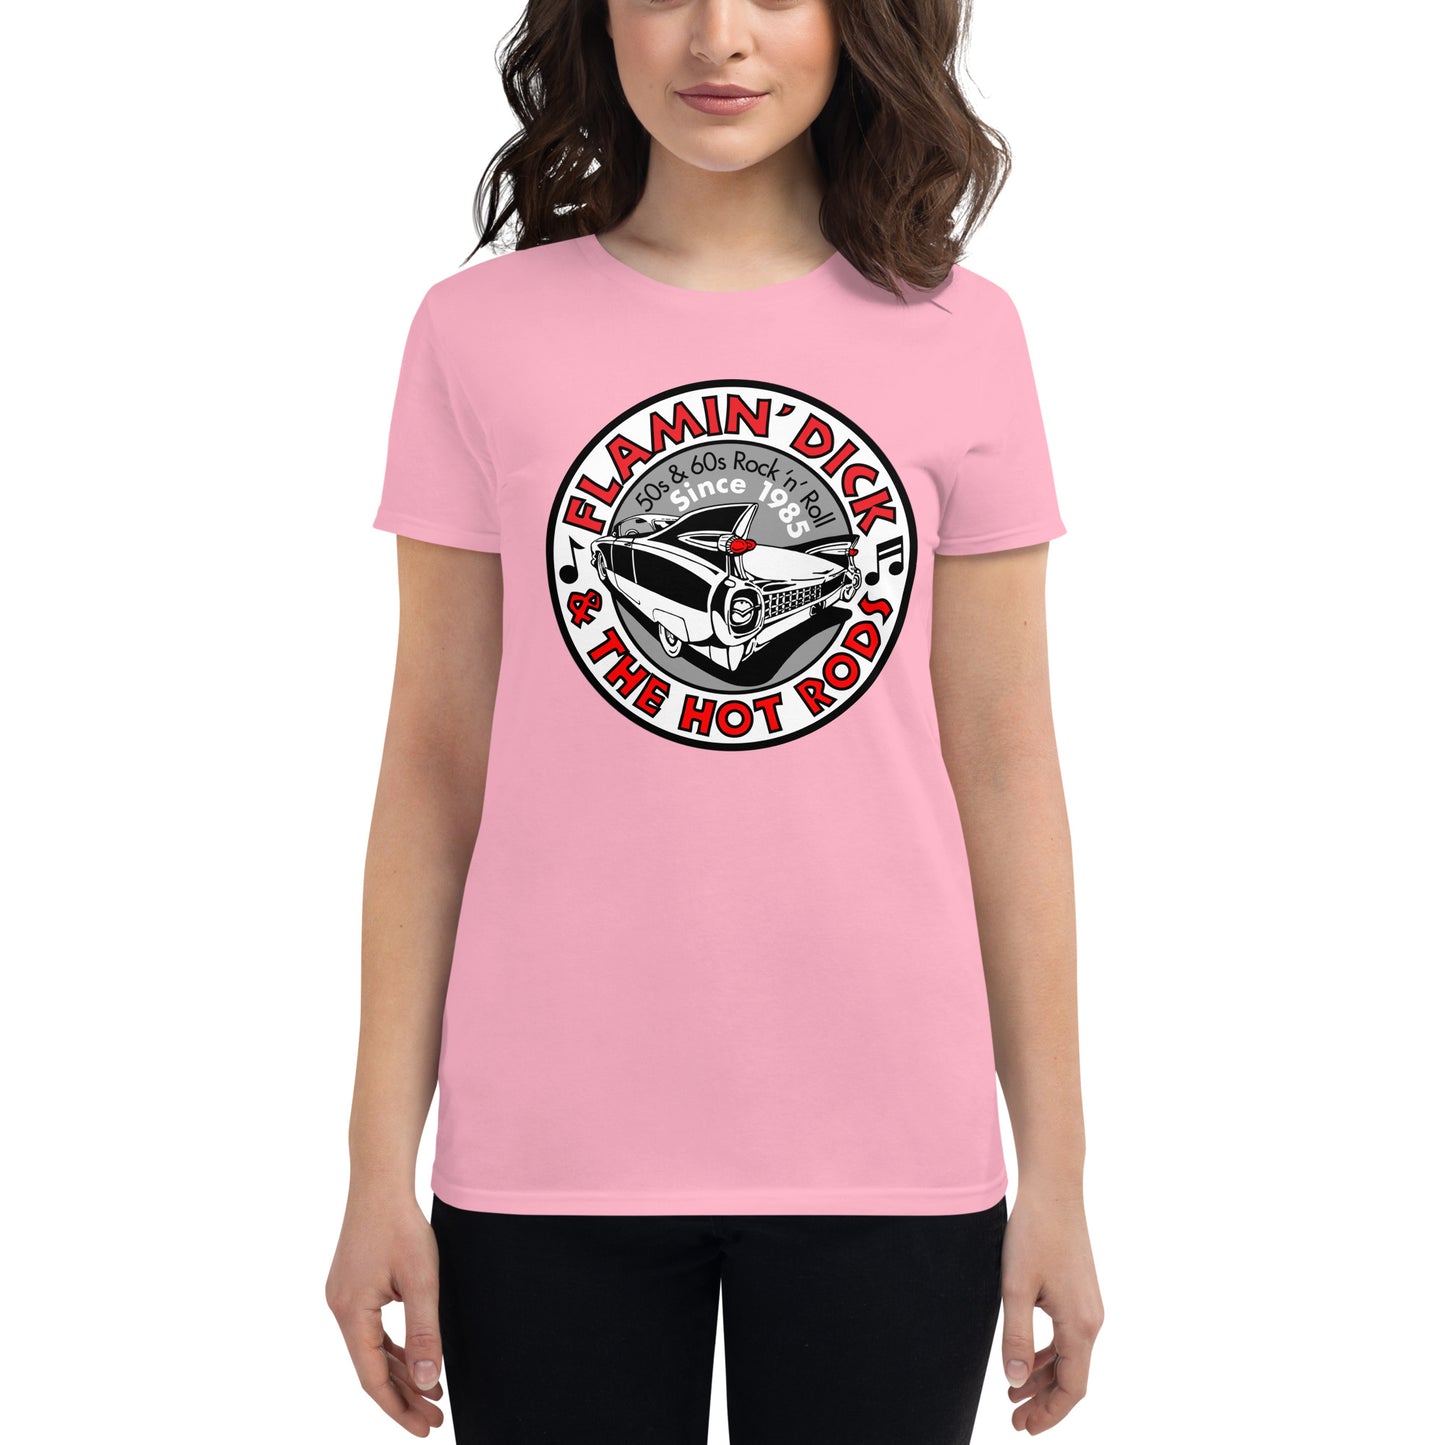 FDHR Women's Fashion Fit T-Shirt - FREE SHIPPING!